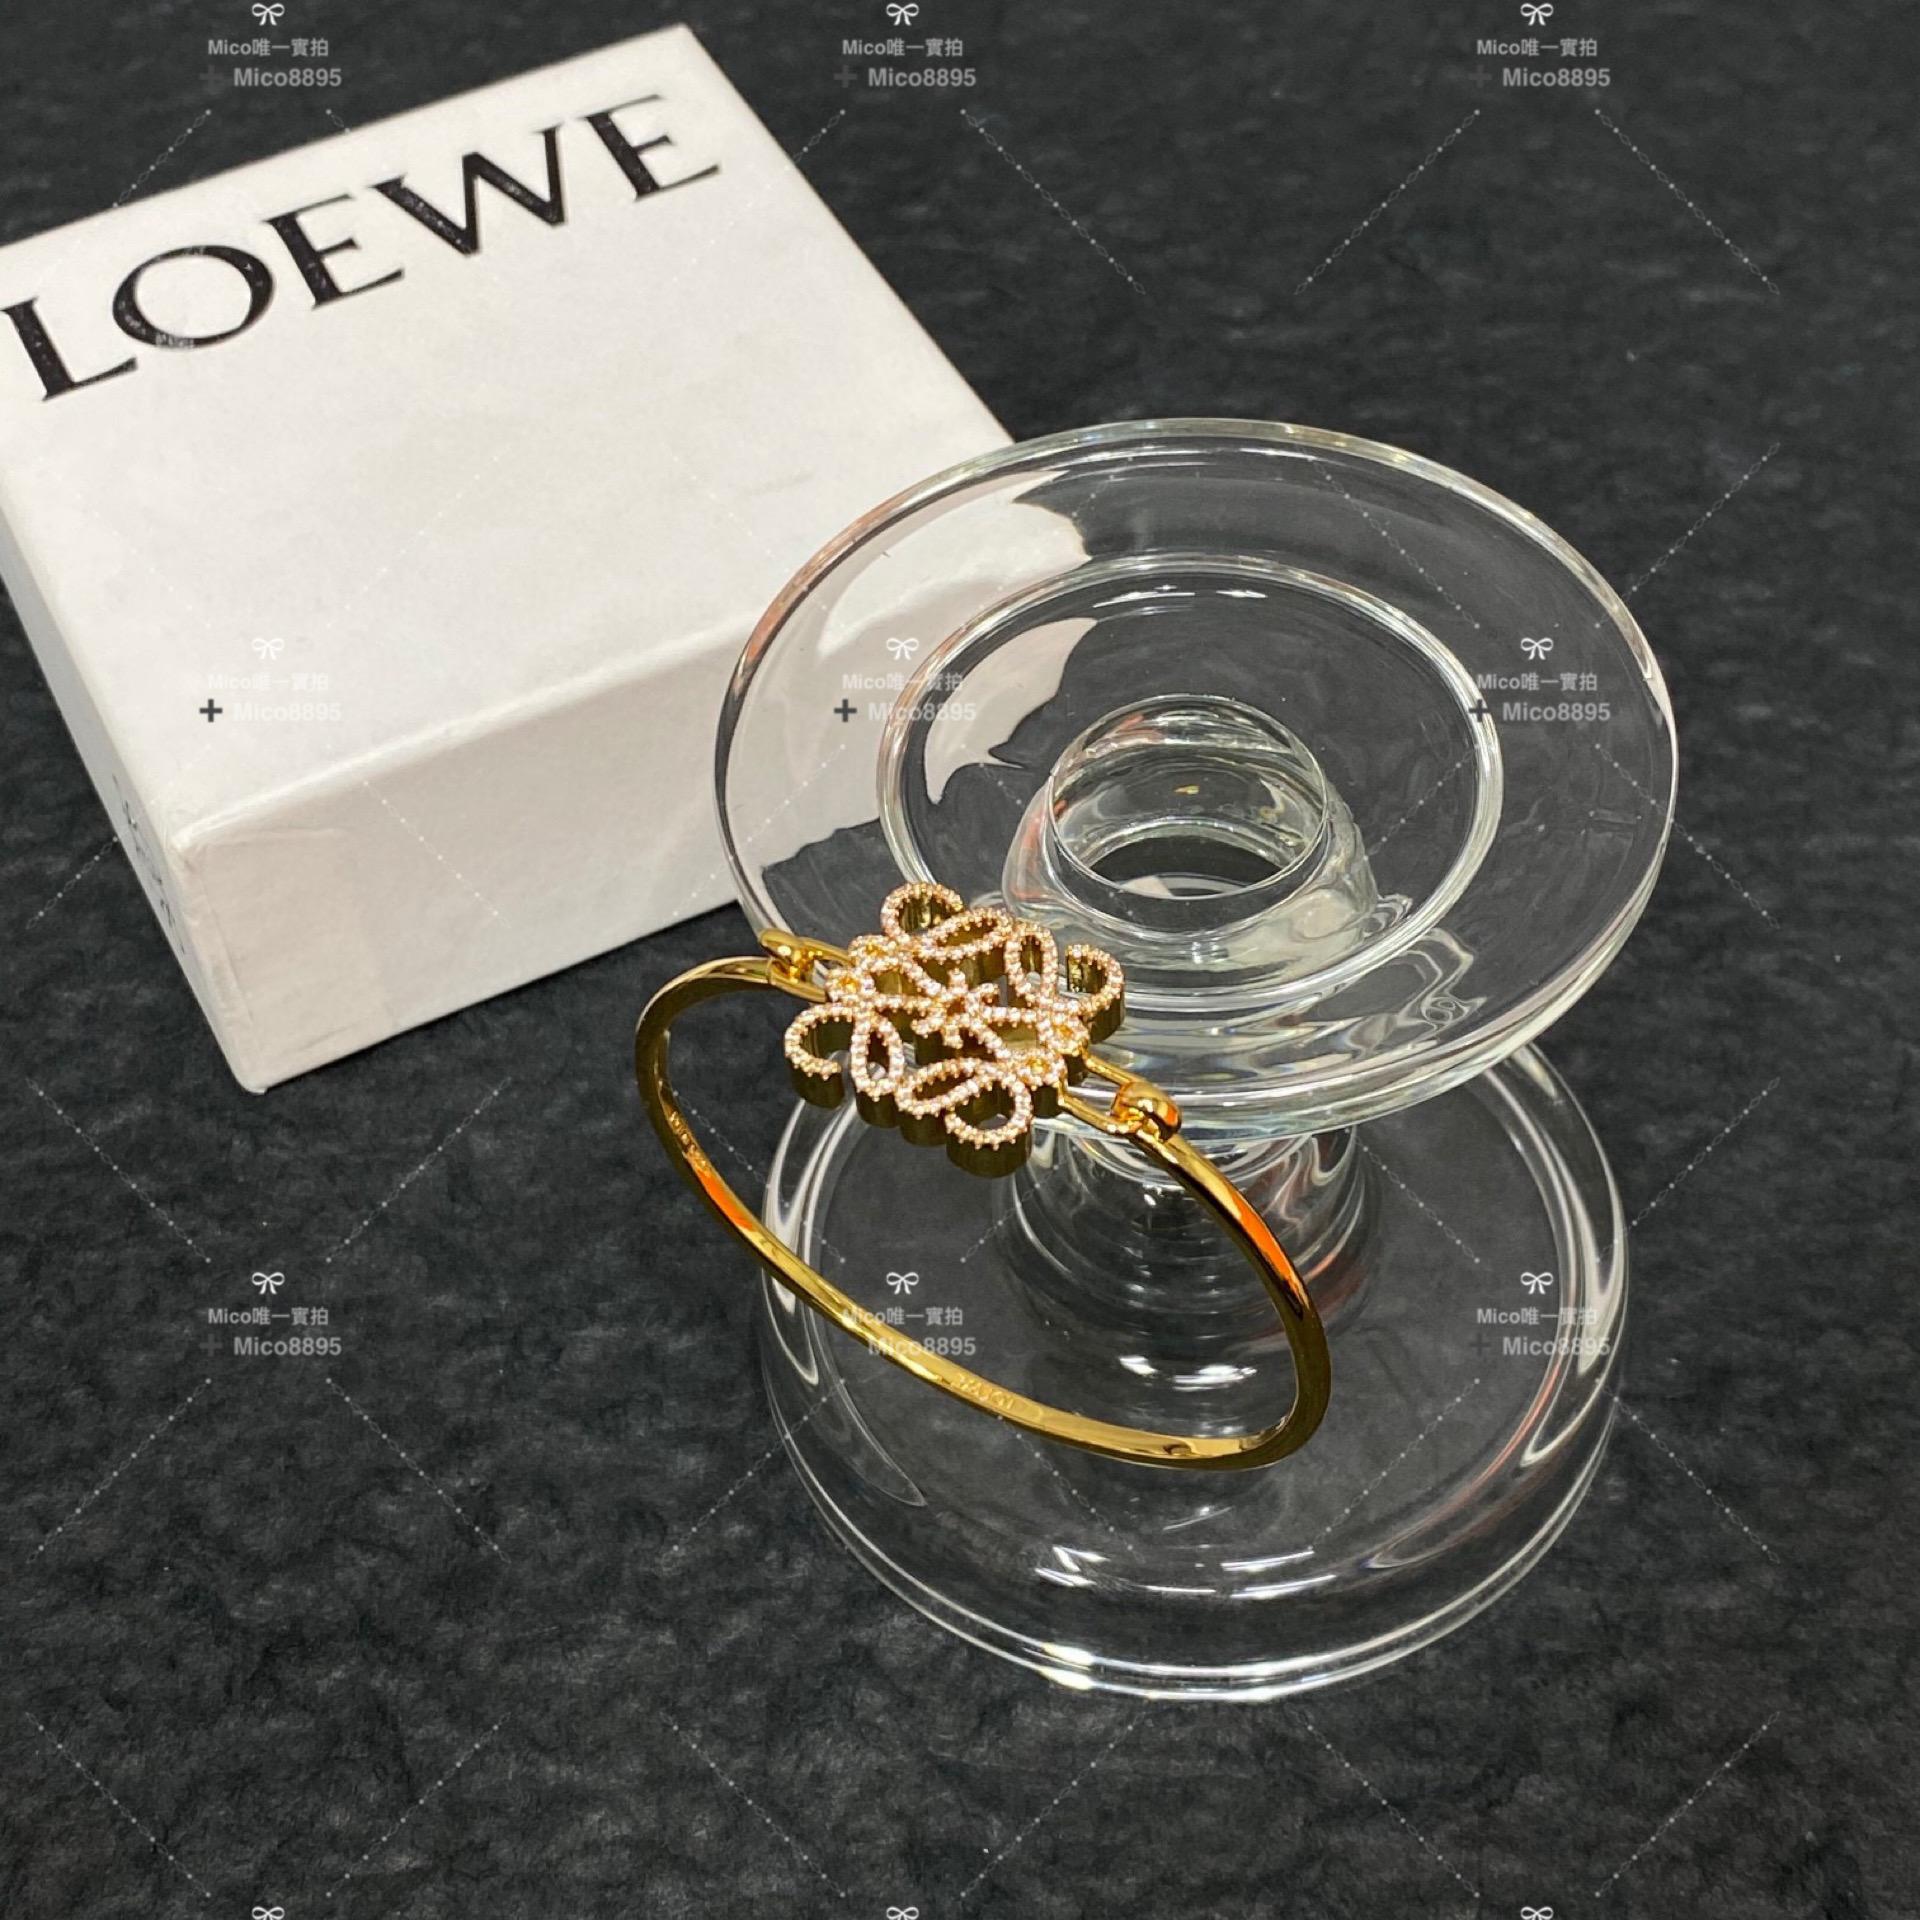 Loewe經典Logo 滿鑽金色手環 低調簡約款